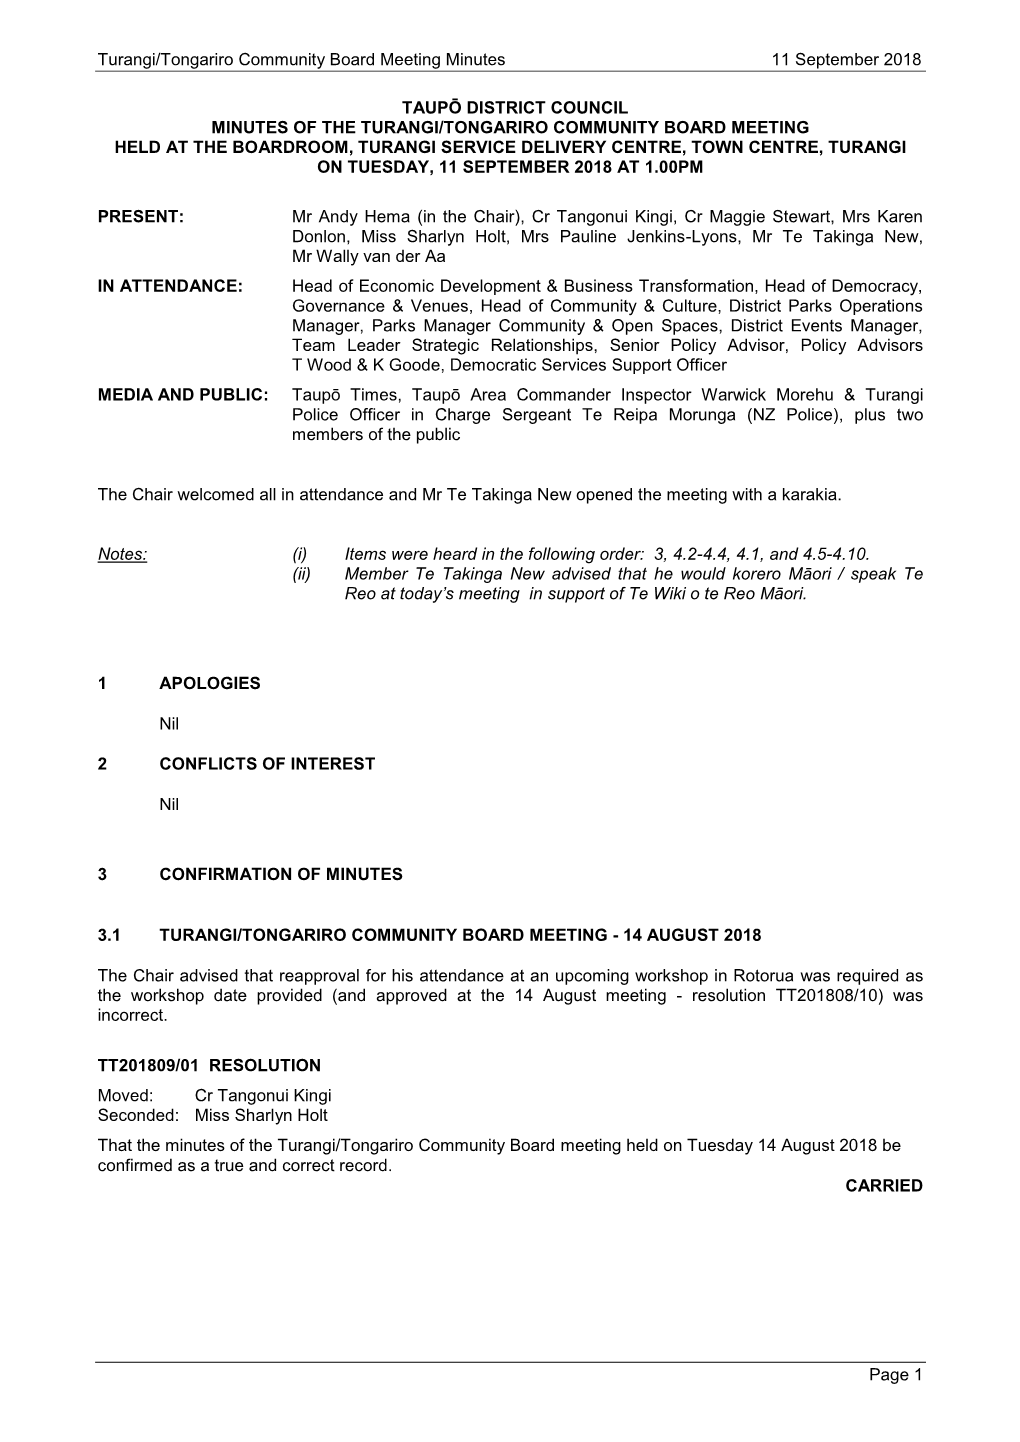 Minutes of Turangi/Tongariro Community Board Meeting